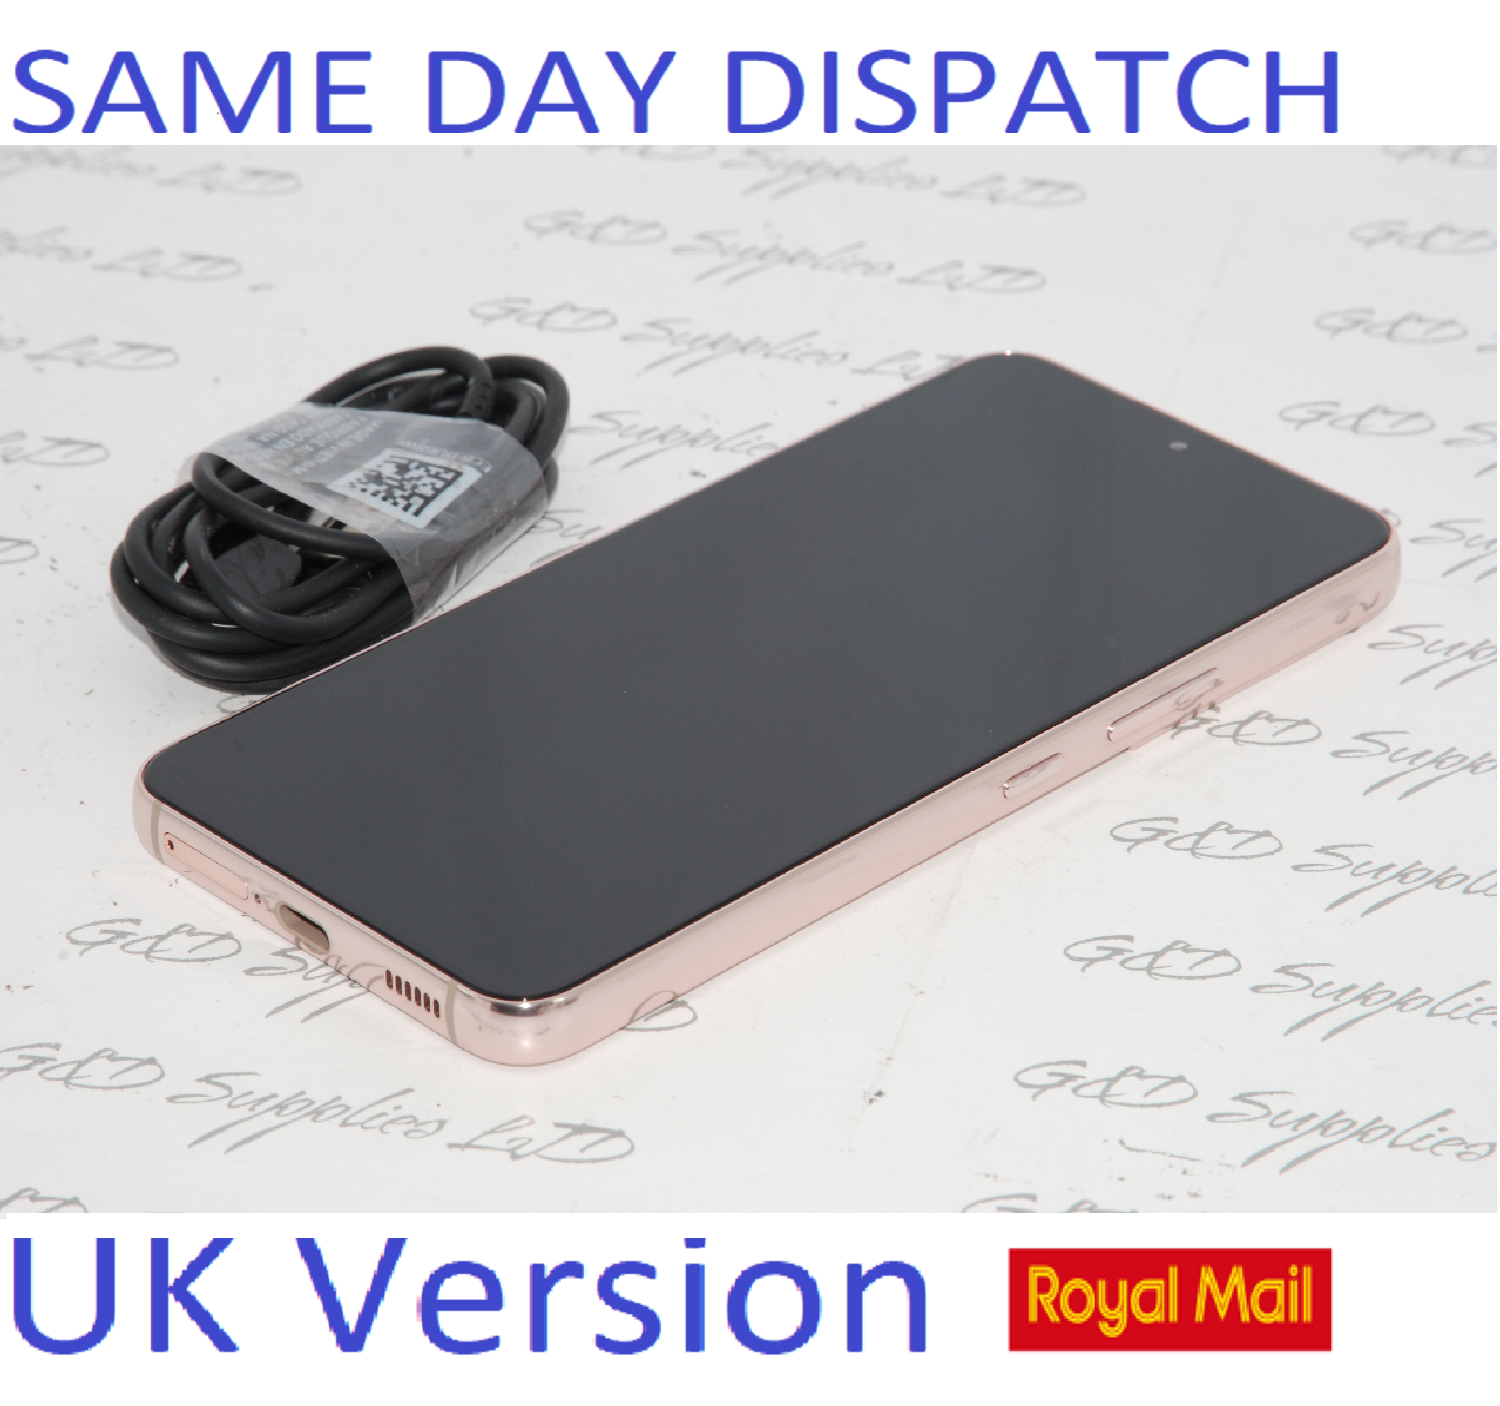 Samsung Galaxy S22 unlocked  128GB Pink Gold 8GB Ram UK Version no box new condition #